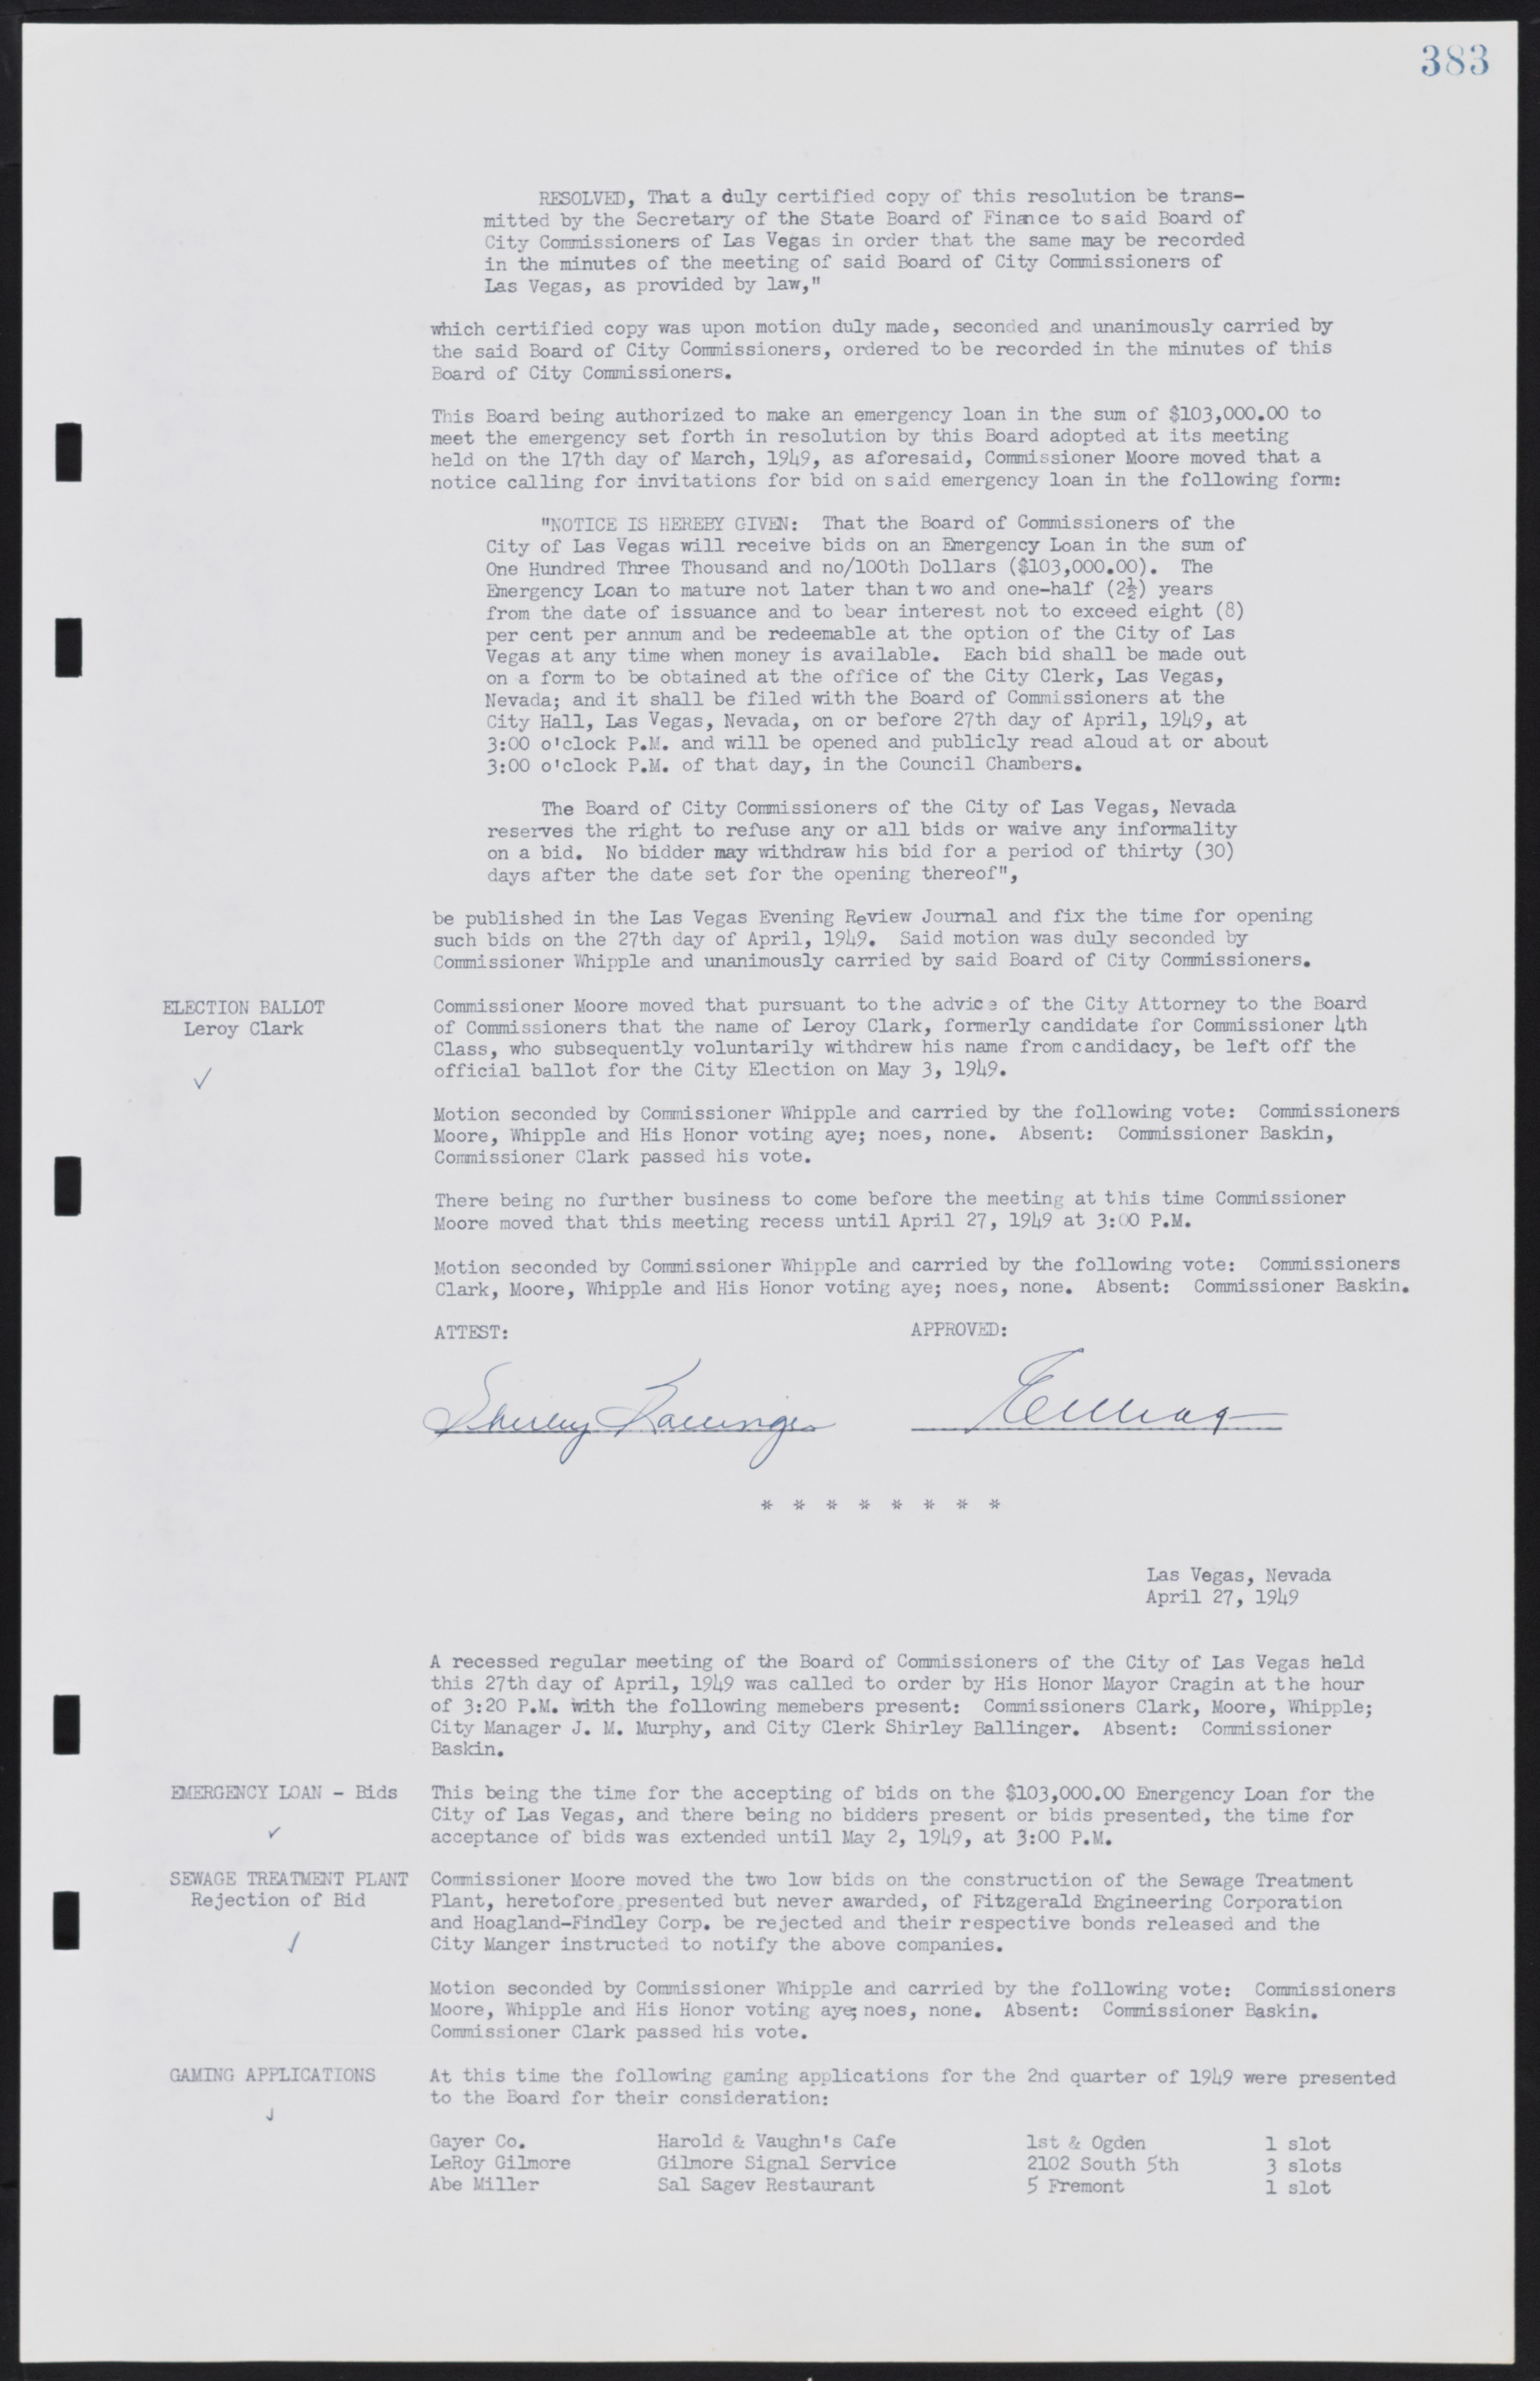 Las Vegas City Commission Minutes, January 7, 1947 to October 26, 1949, lvc000006-413